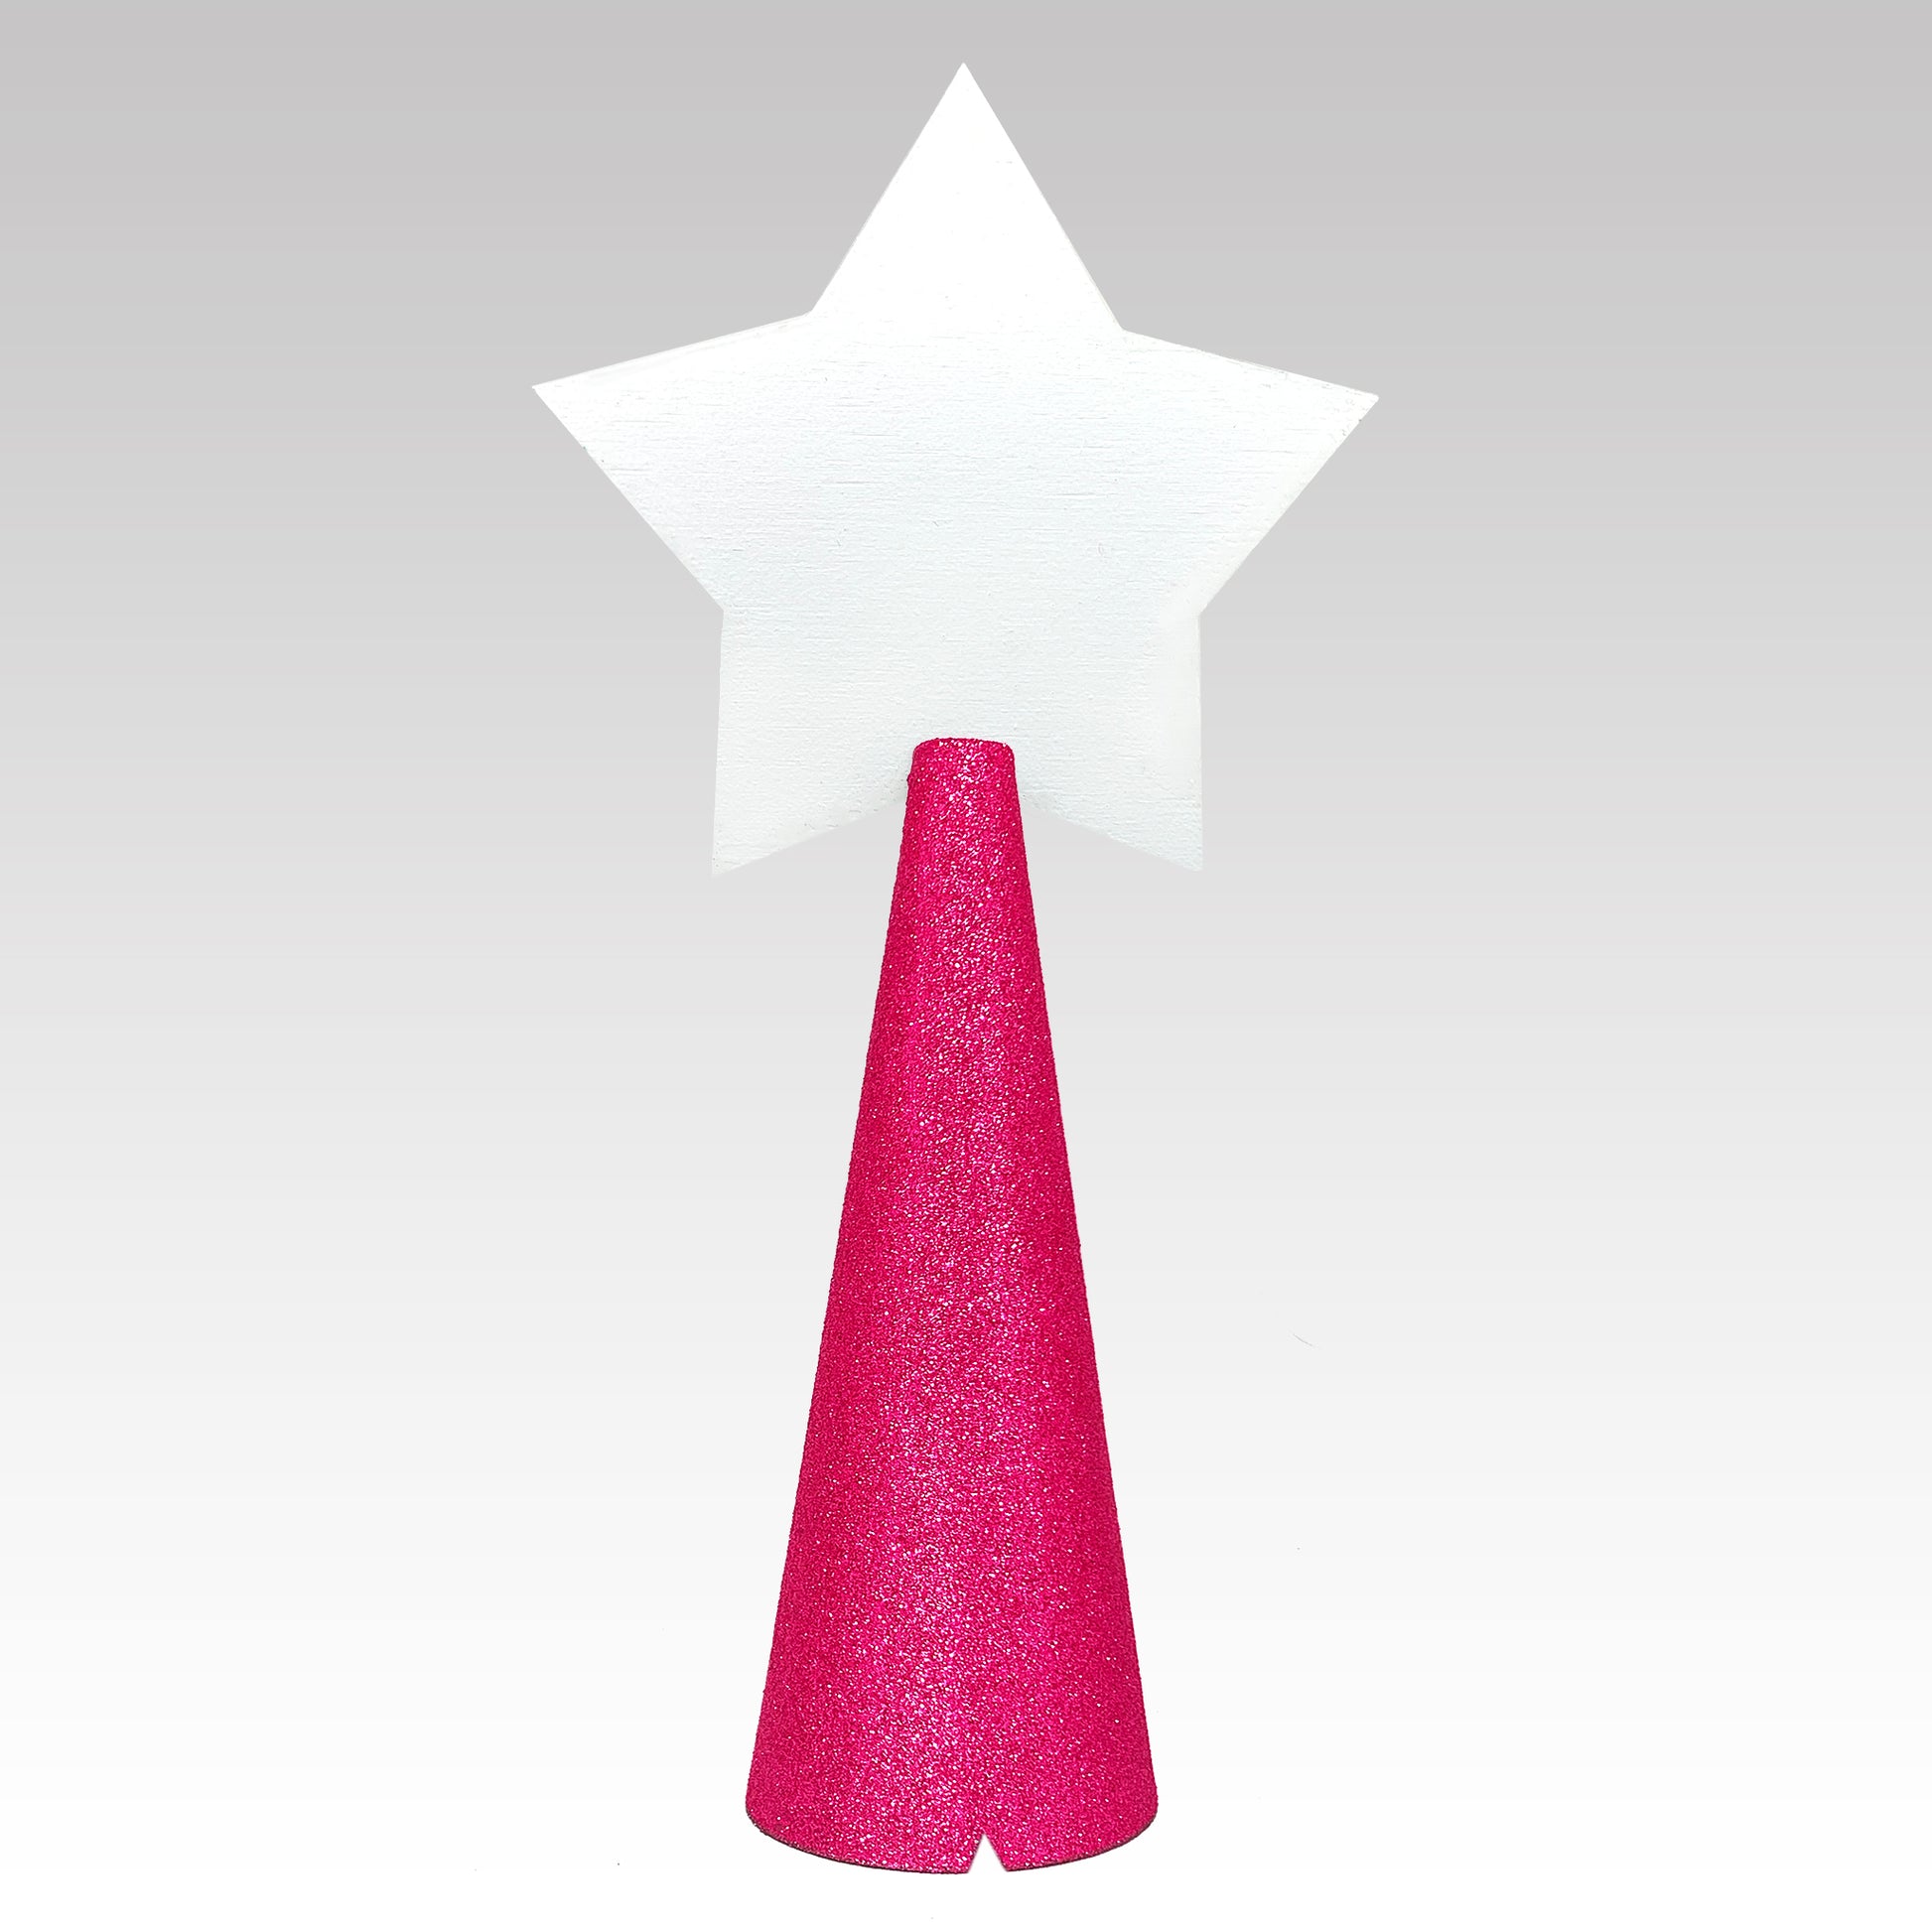 Custom tree topper - White Star - back - hot pink / magenta glitter cone